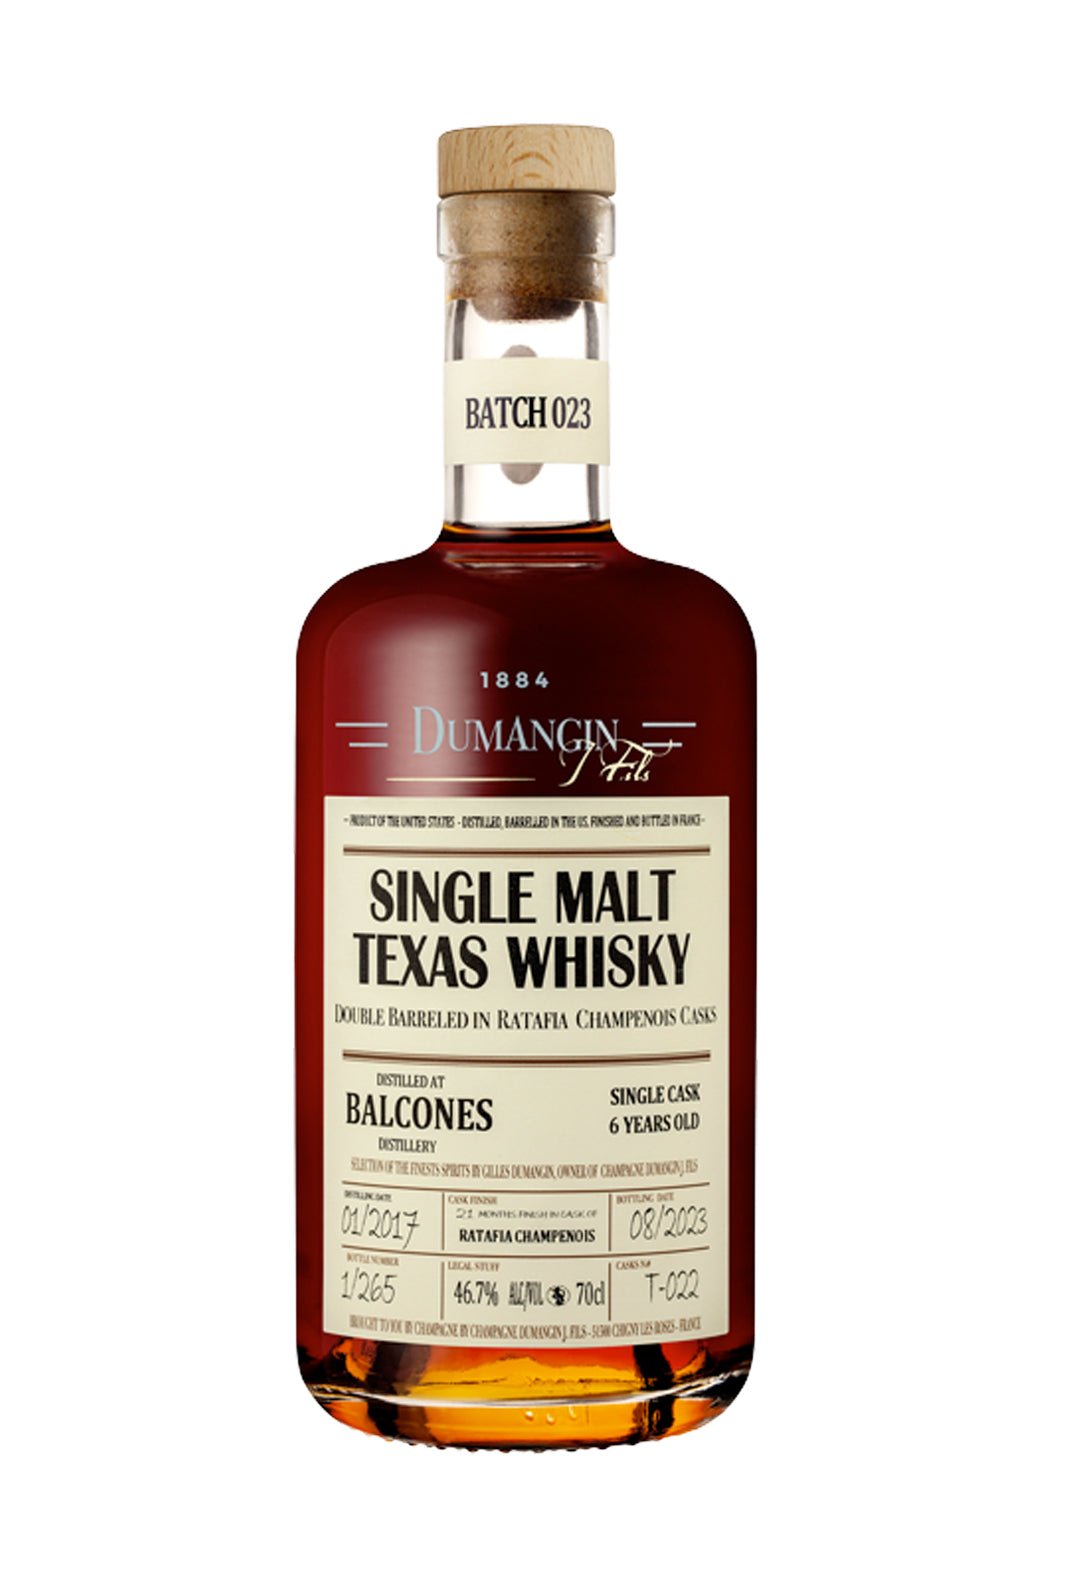 Dumangin 023 Balcones 2017 Single Mait Texas Whisky 46.7% 700ml | Whisky | Shop online at Spirits of France